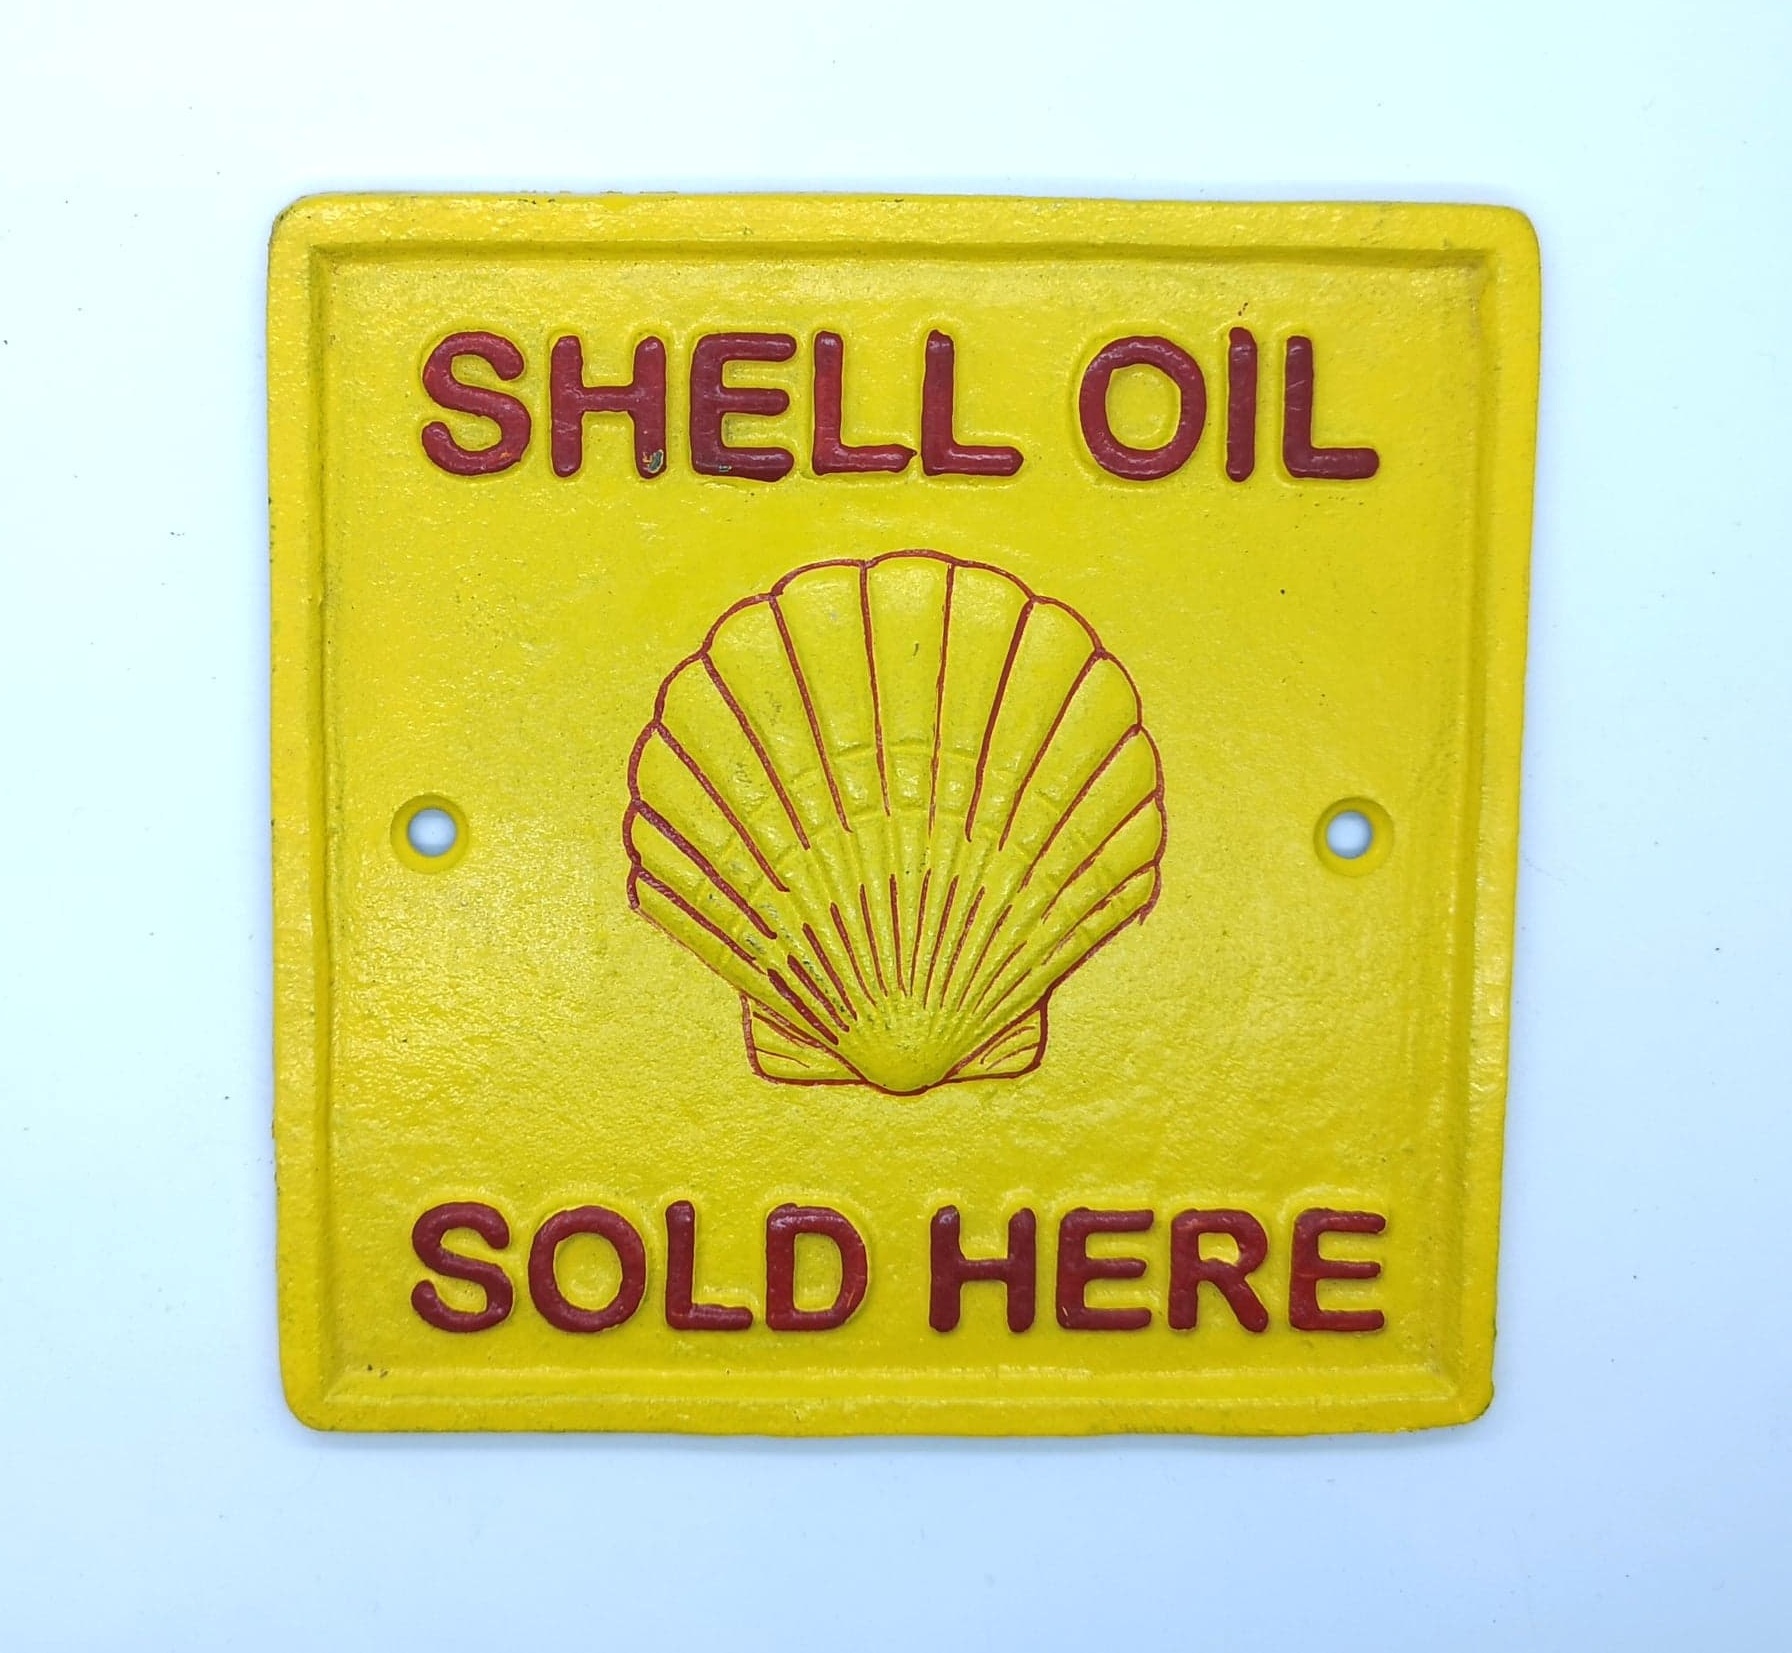 Shell Oil Square Cast Iron Vintage Garage Advertising Sign 16cm x 16cm